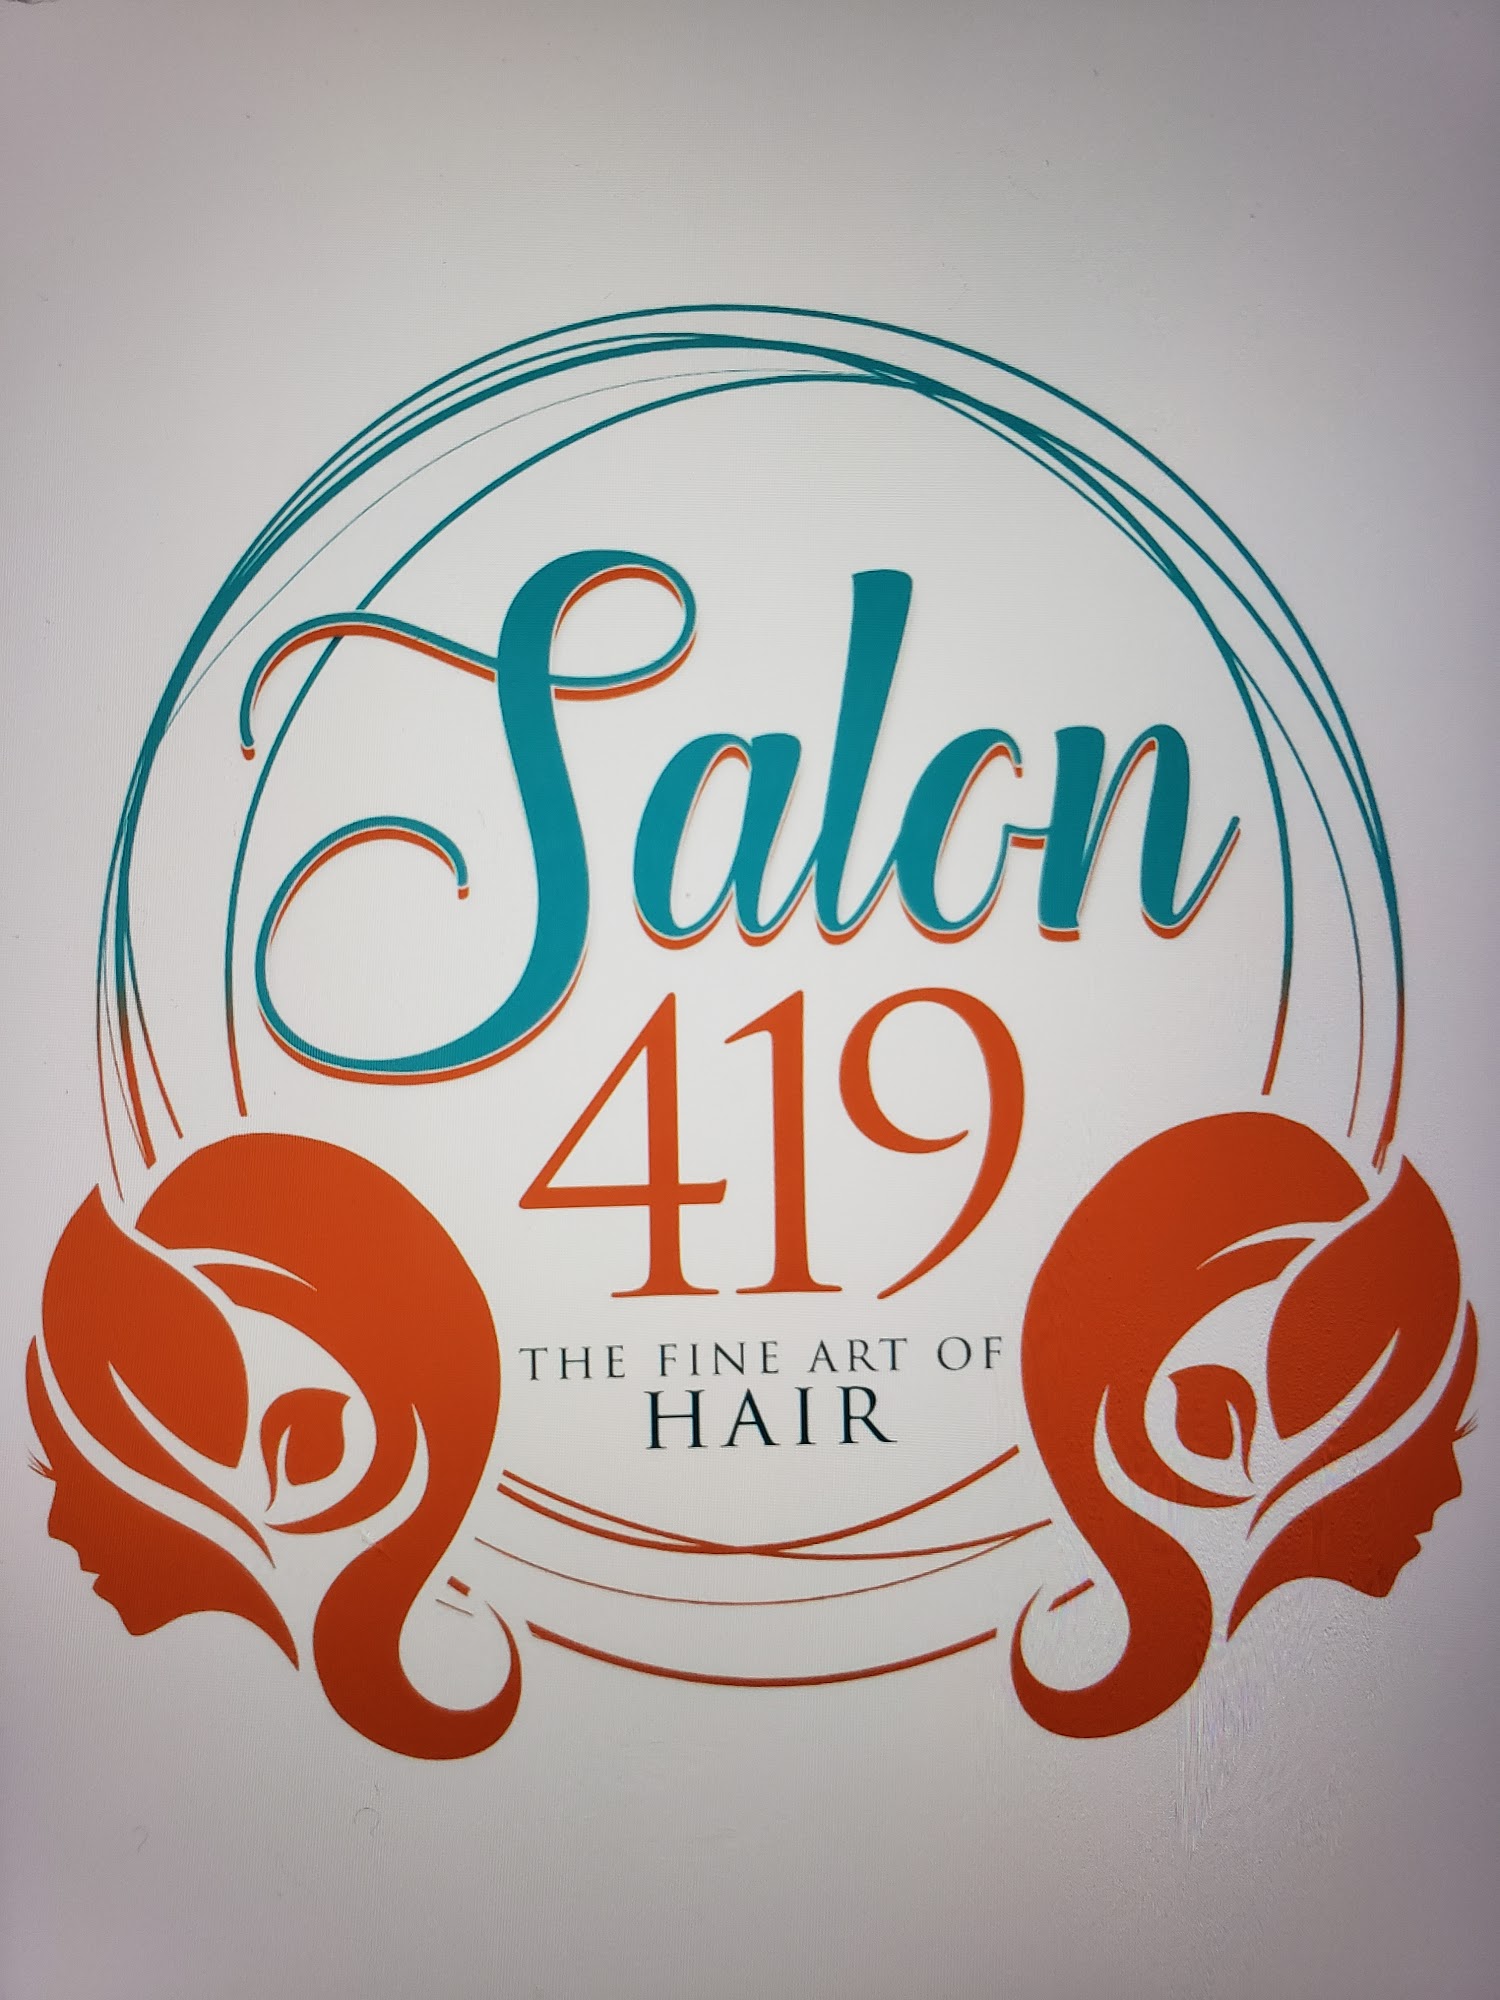 Salon 419